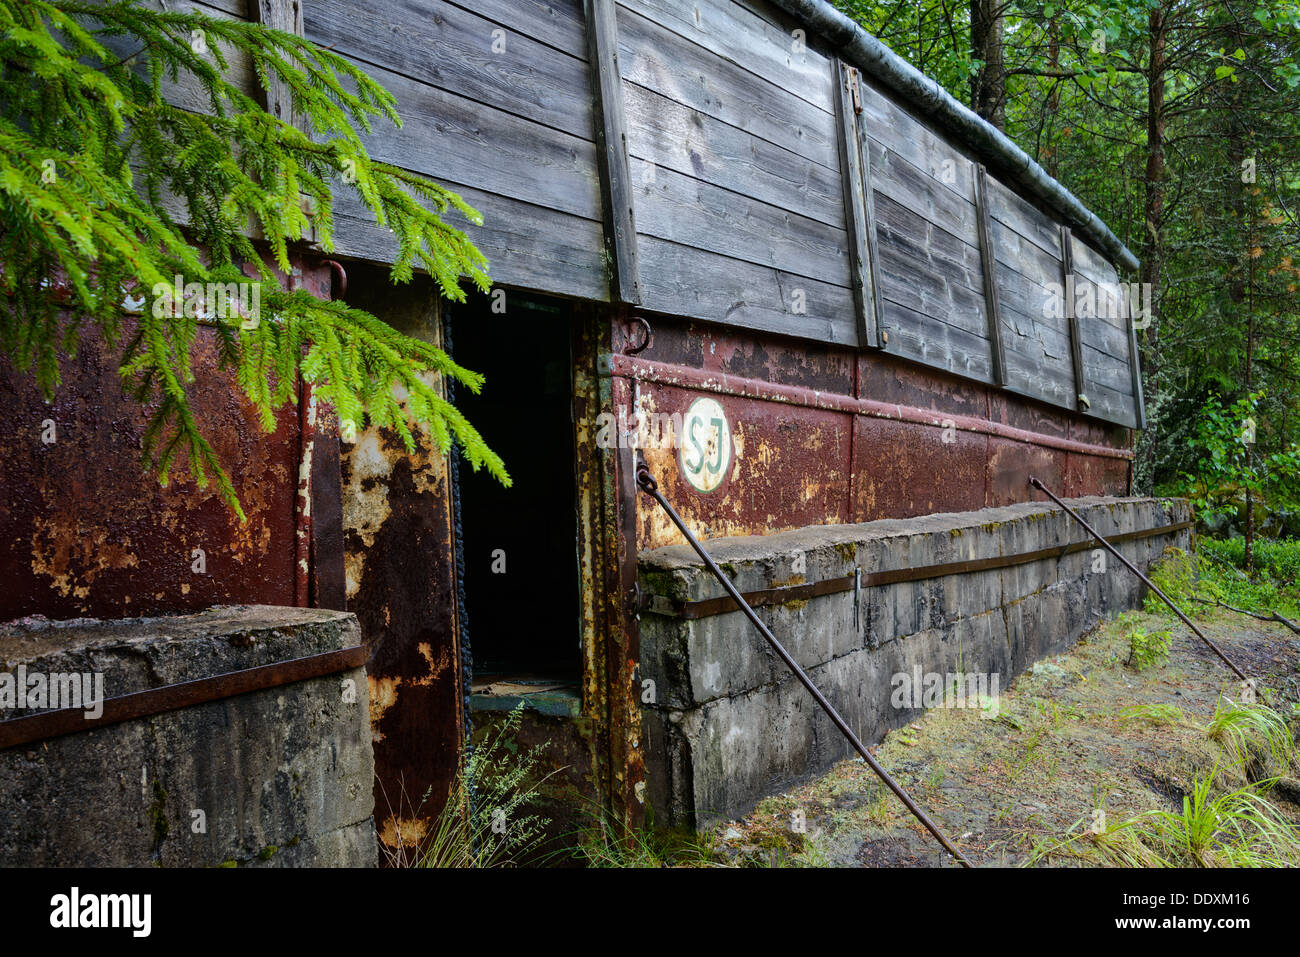 Abandoned bus, Orsa, Dalarna, Sweden Stock Photo